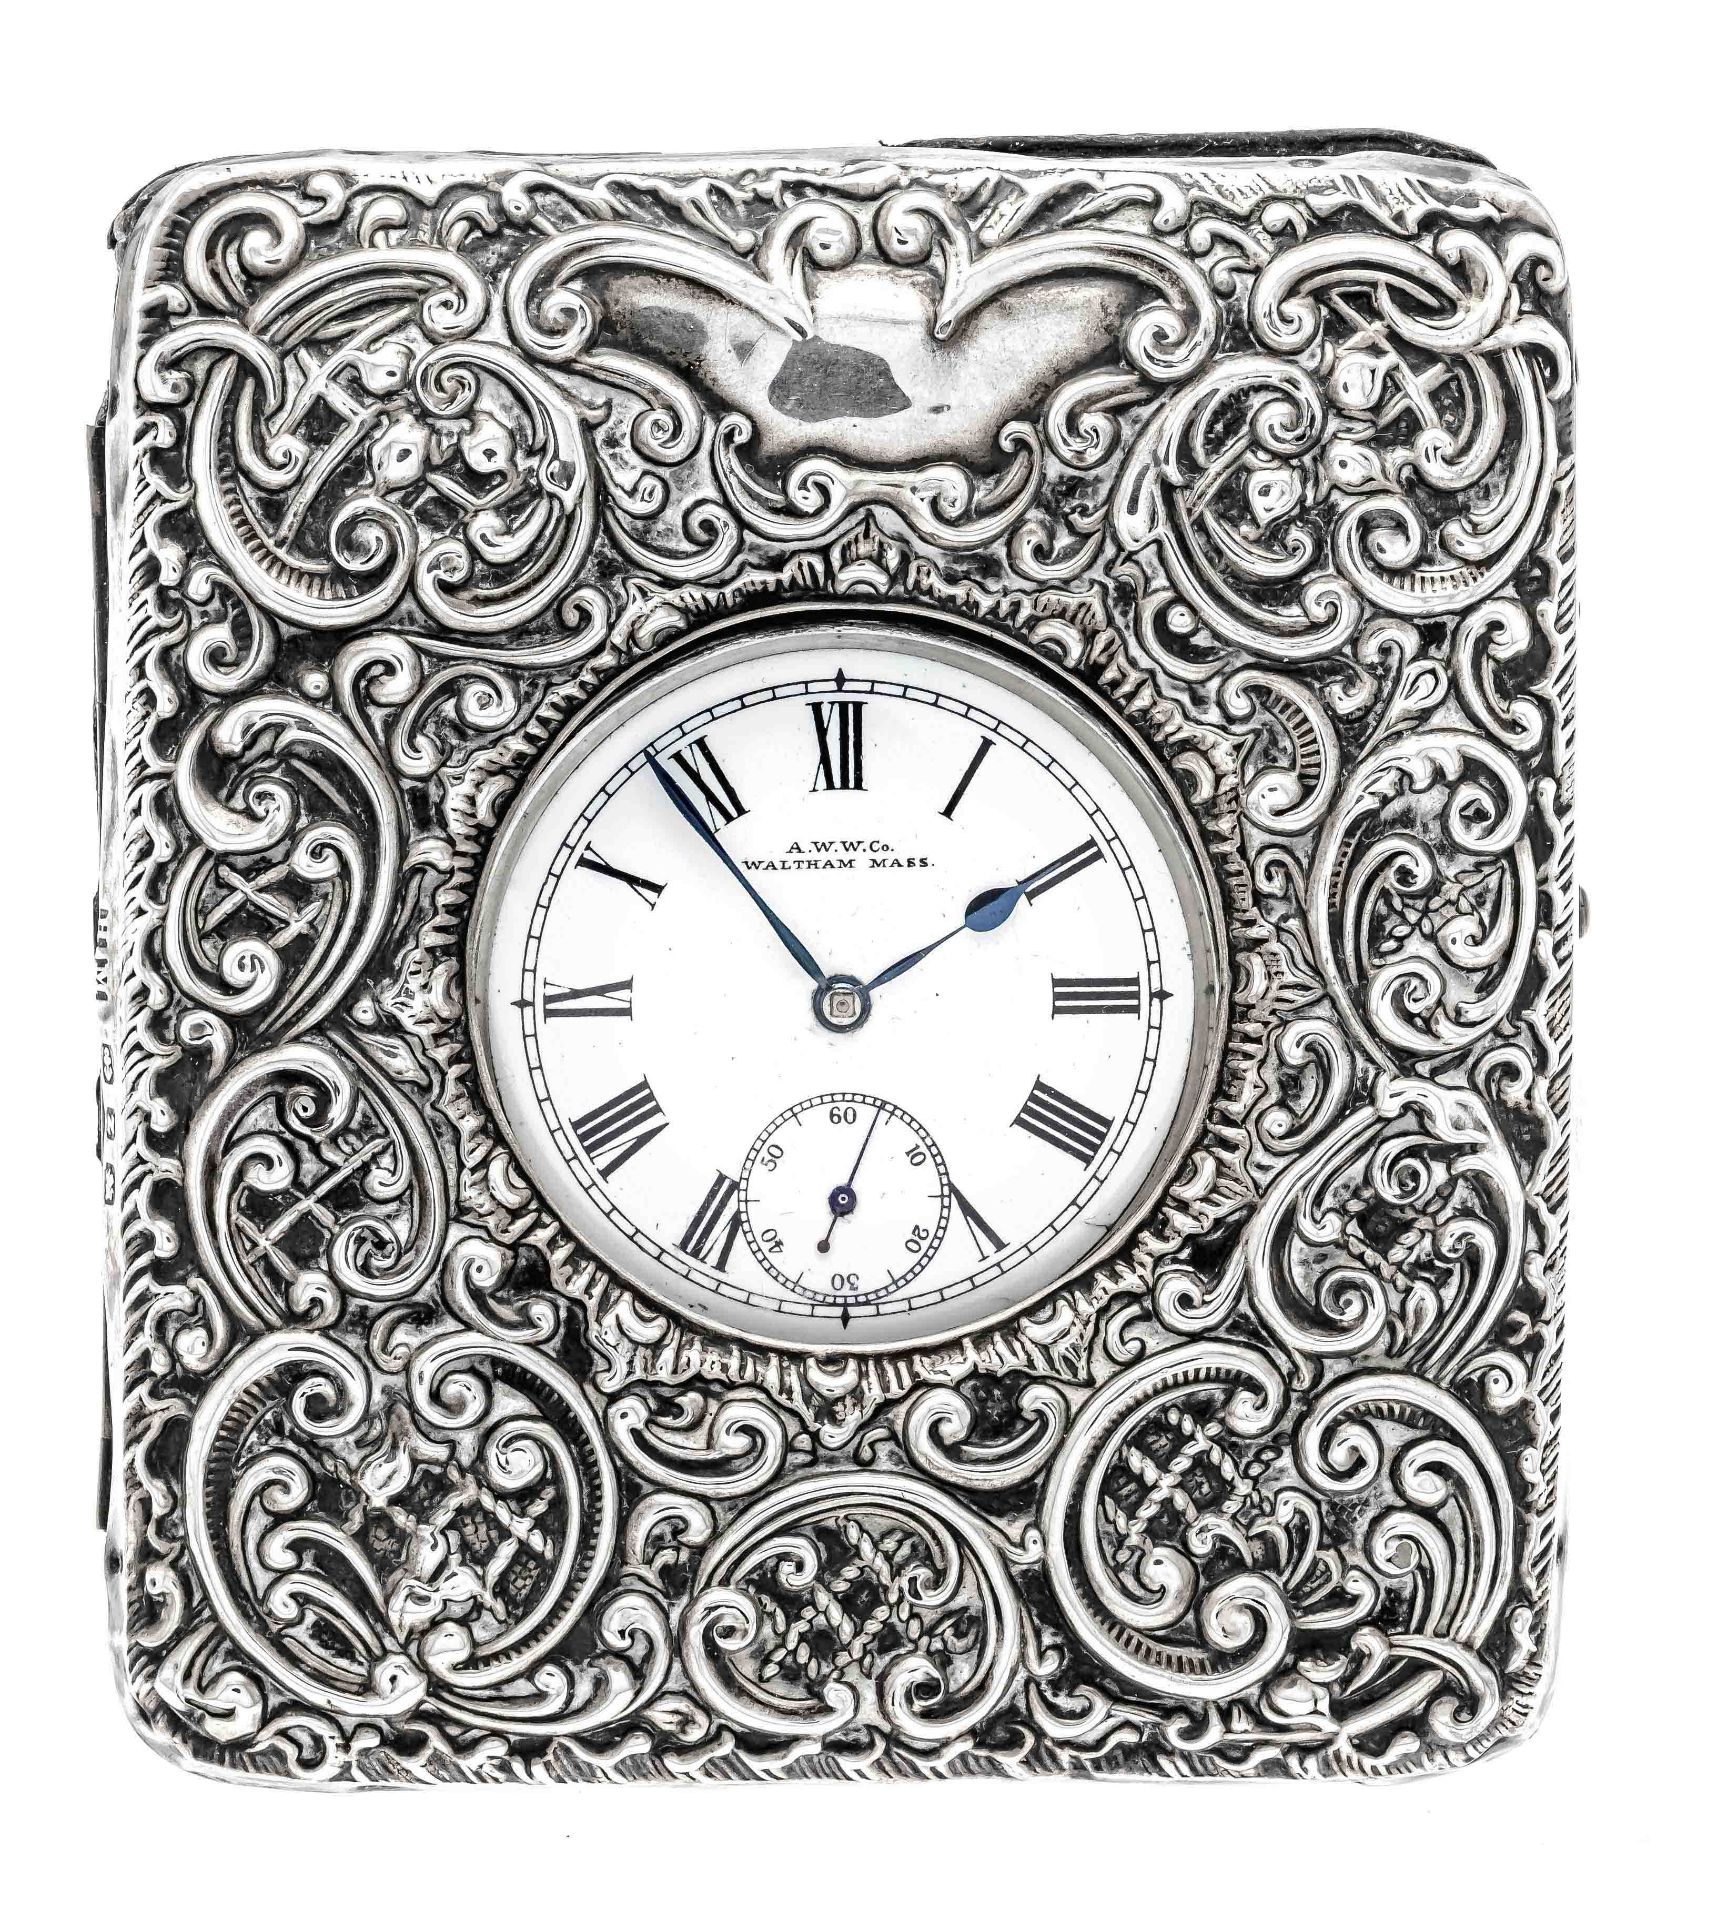 Pocket watch in pocket watch frame, silver, pocket watch by A.W.W. Co. & Waltham Mass, silver - Image 3 of 3